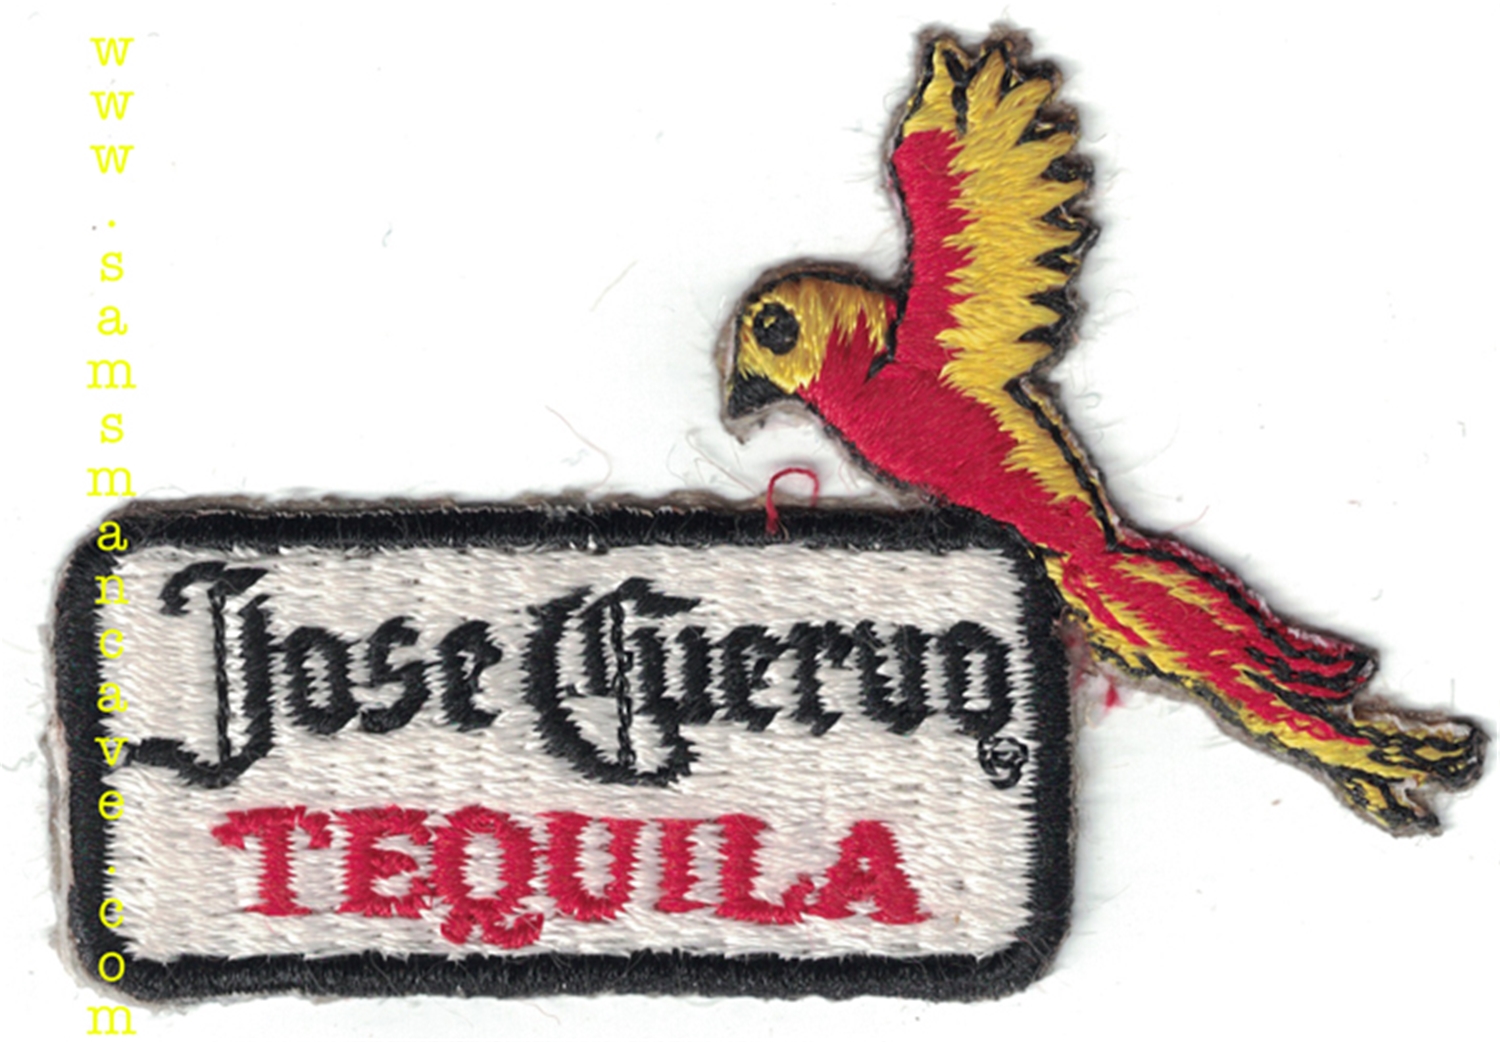 Jose Cuervo Tequila Patch